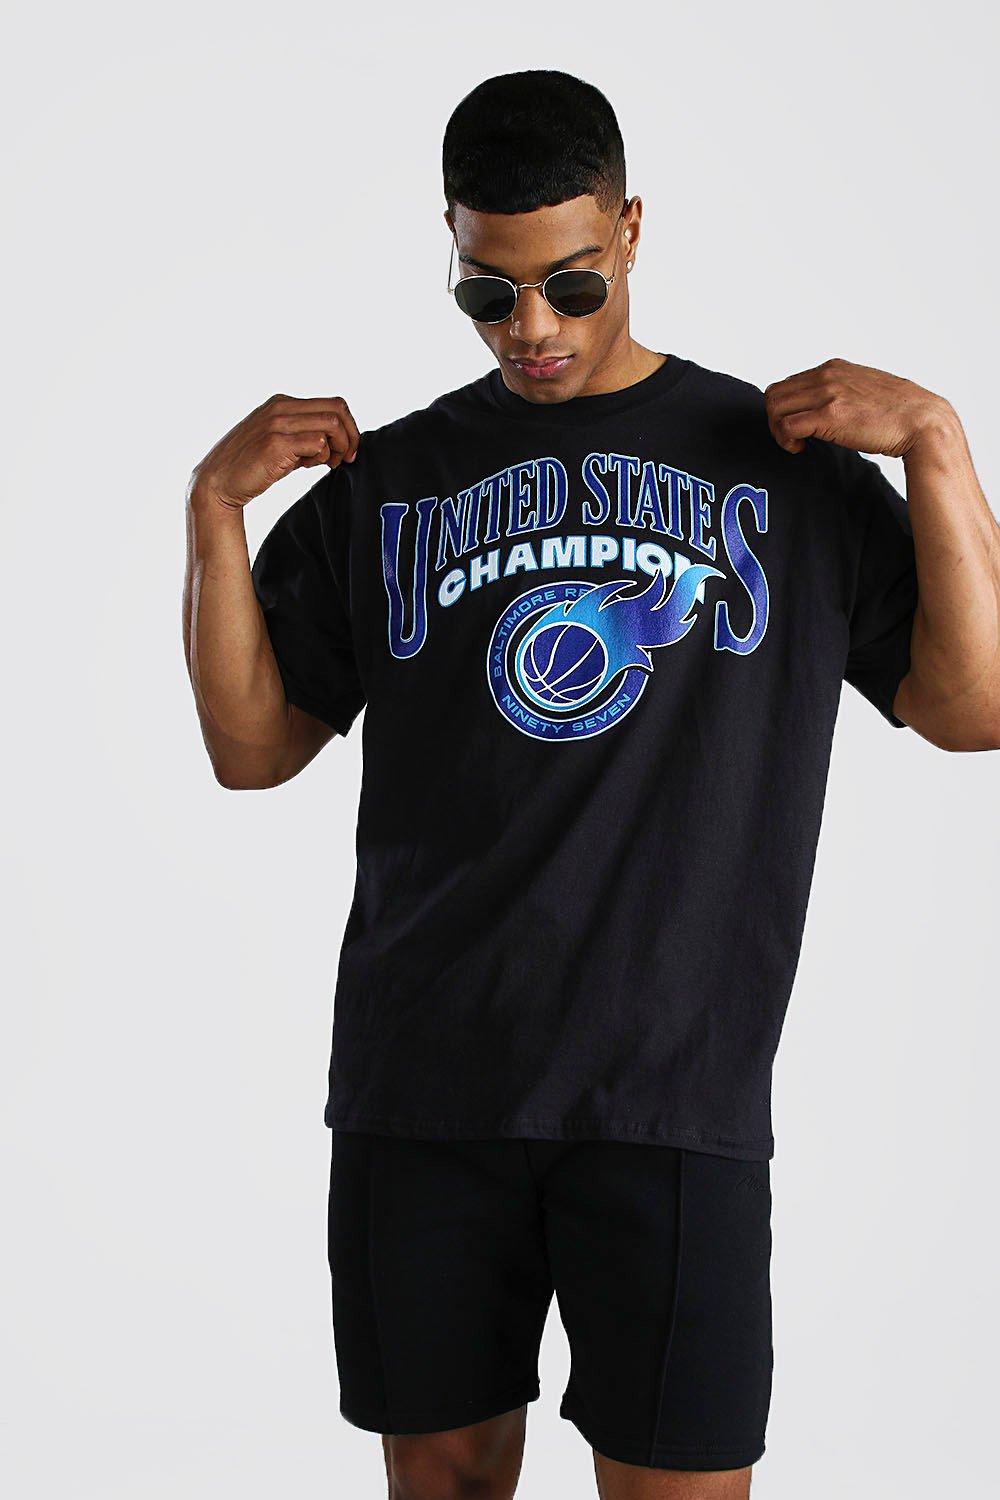 oversized champion shirt